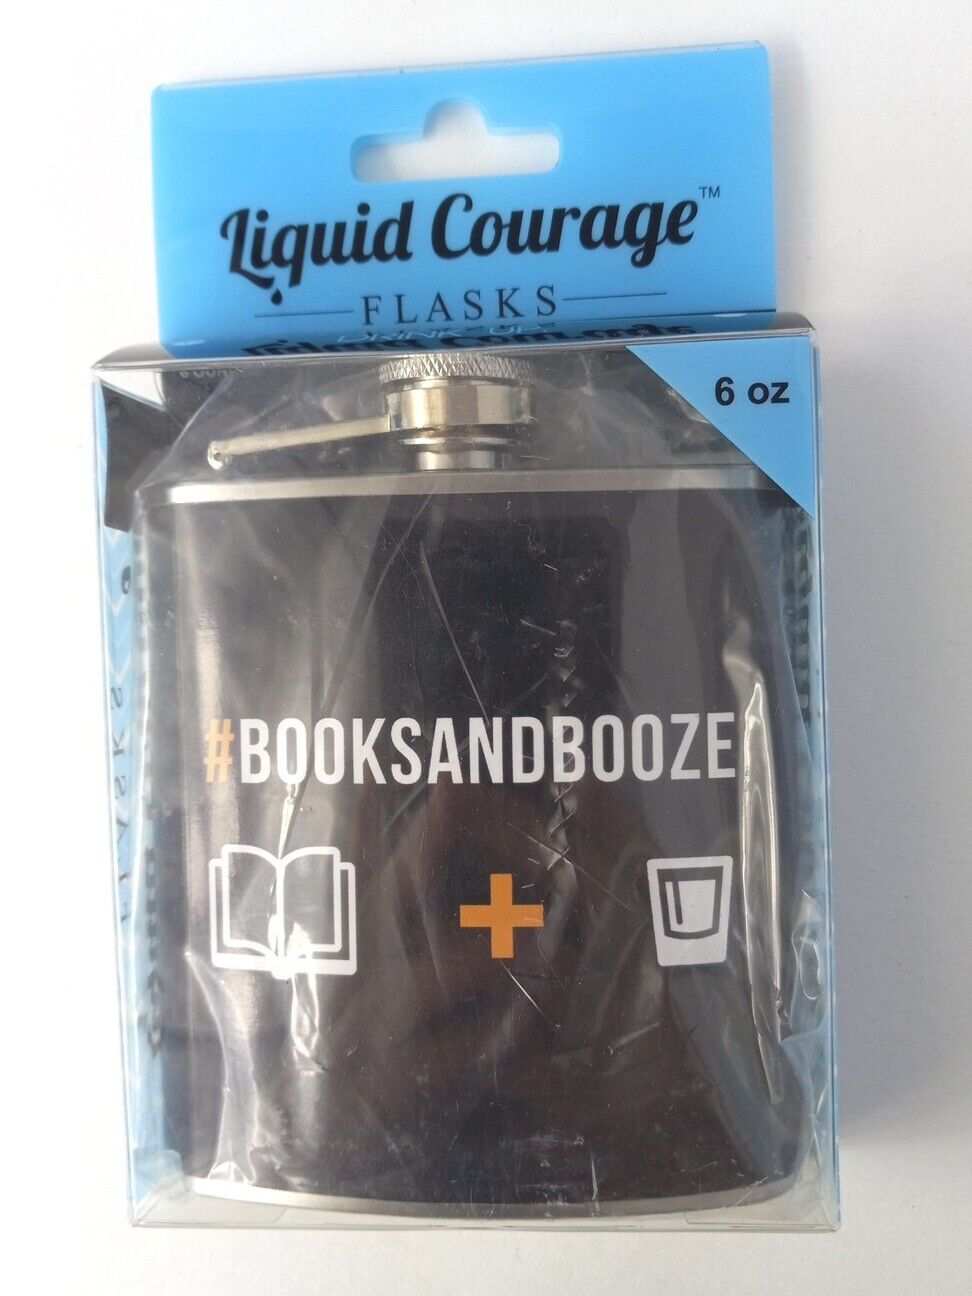 Liquid Courage Flask #BooksandBooze Stainless Steel 6 Oz 4.75x3.5